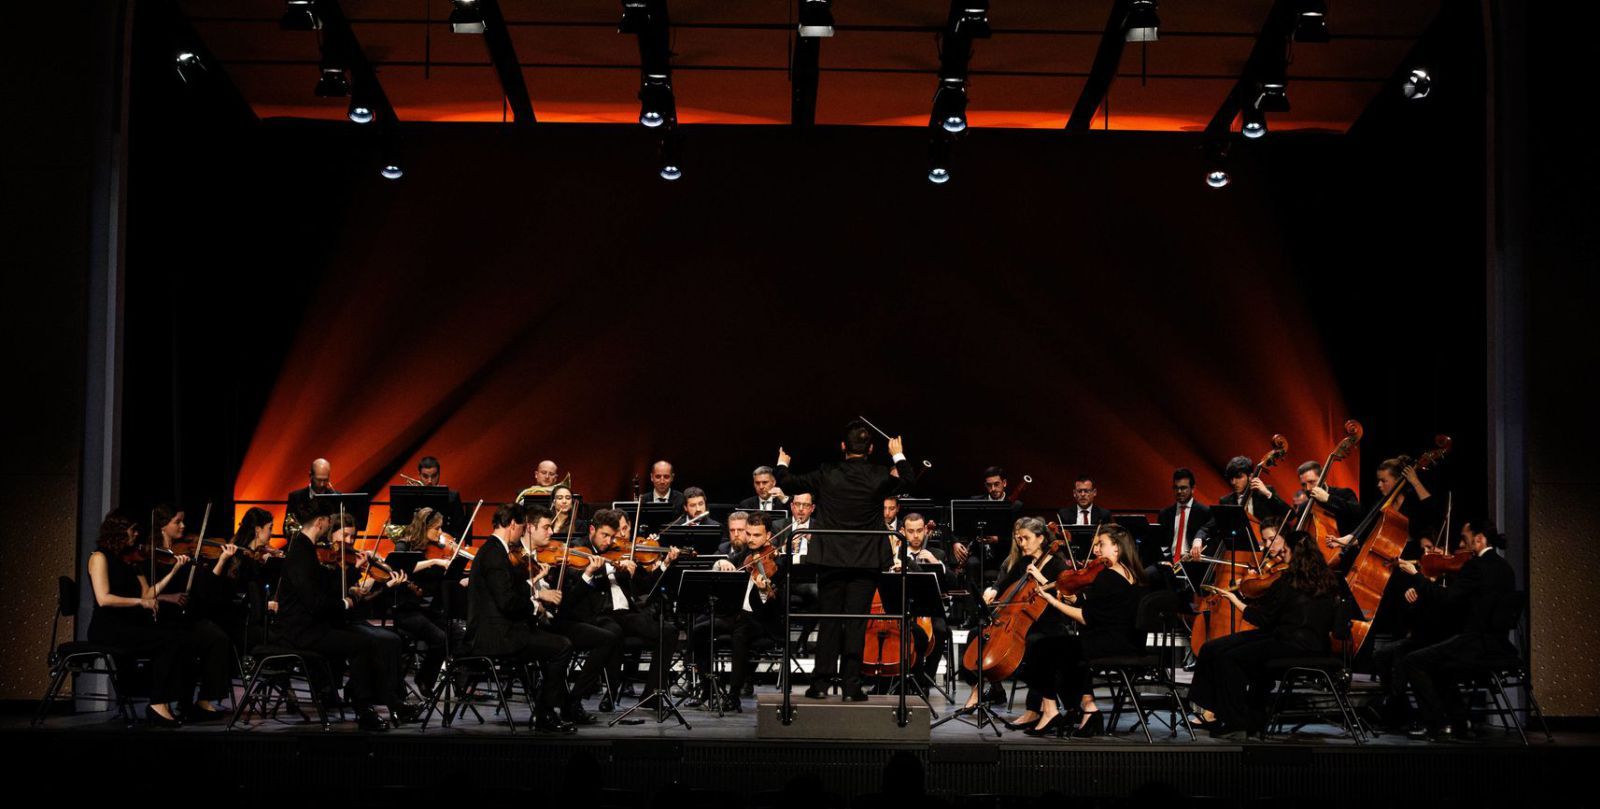 Vielseitig und hochtalentiert: das Orquestra de Cambra de Mallorca, das mallorquinische Kammerorchester.